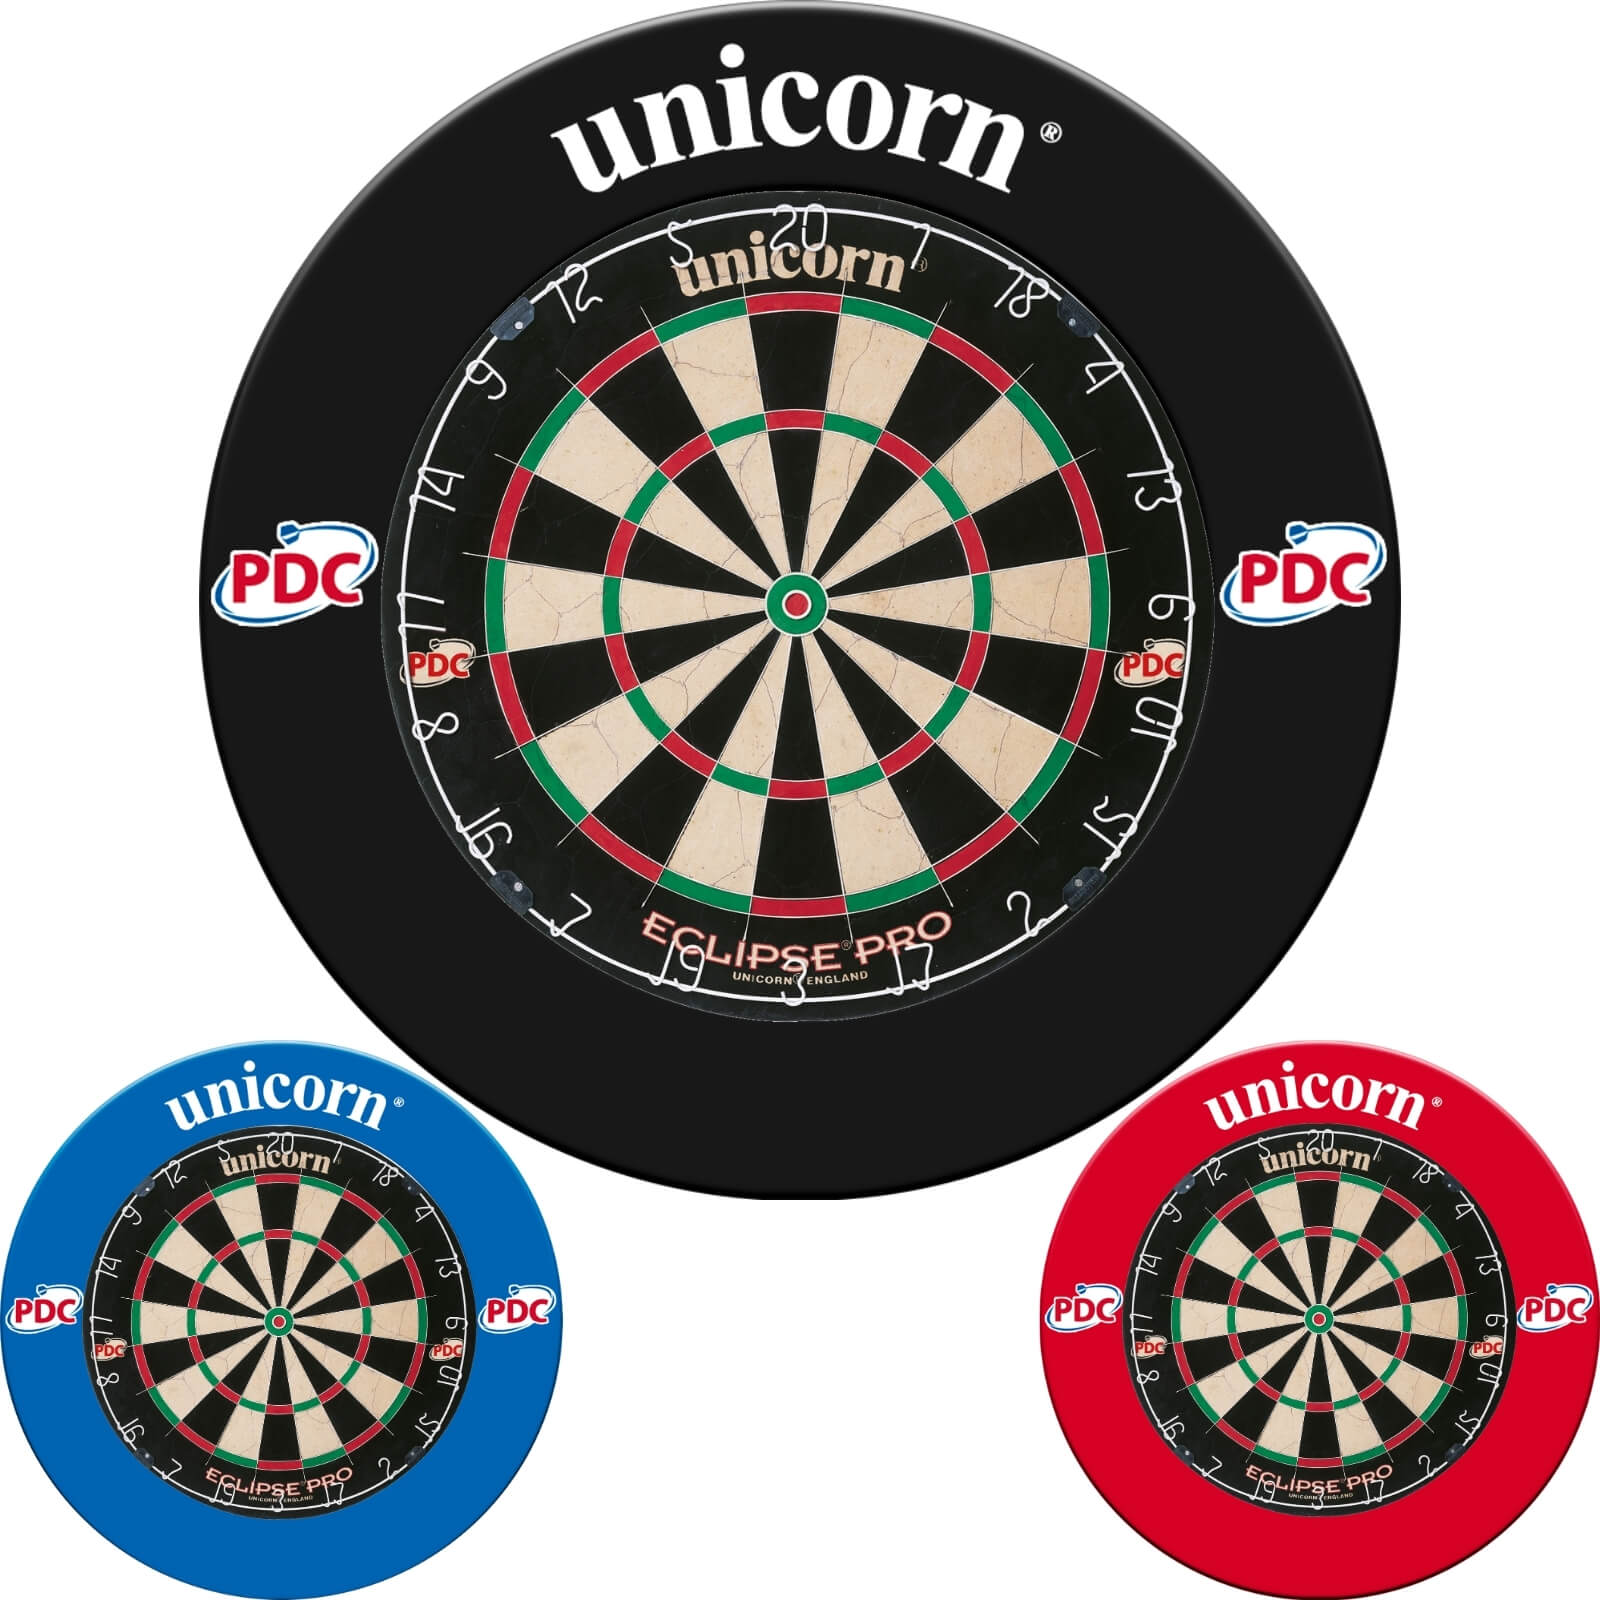 Dartboards - Unicorn - Eclipse Pro Dartboard & Surround Package 